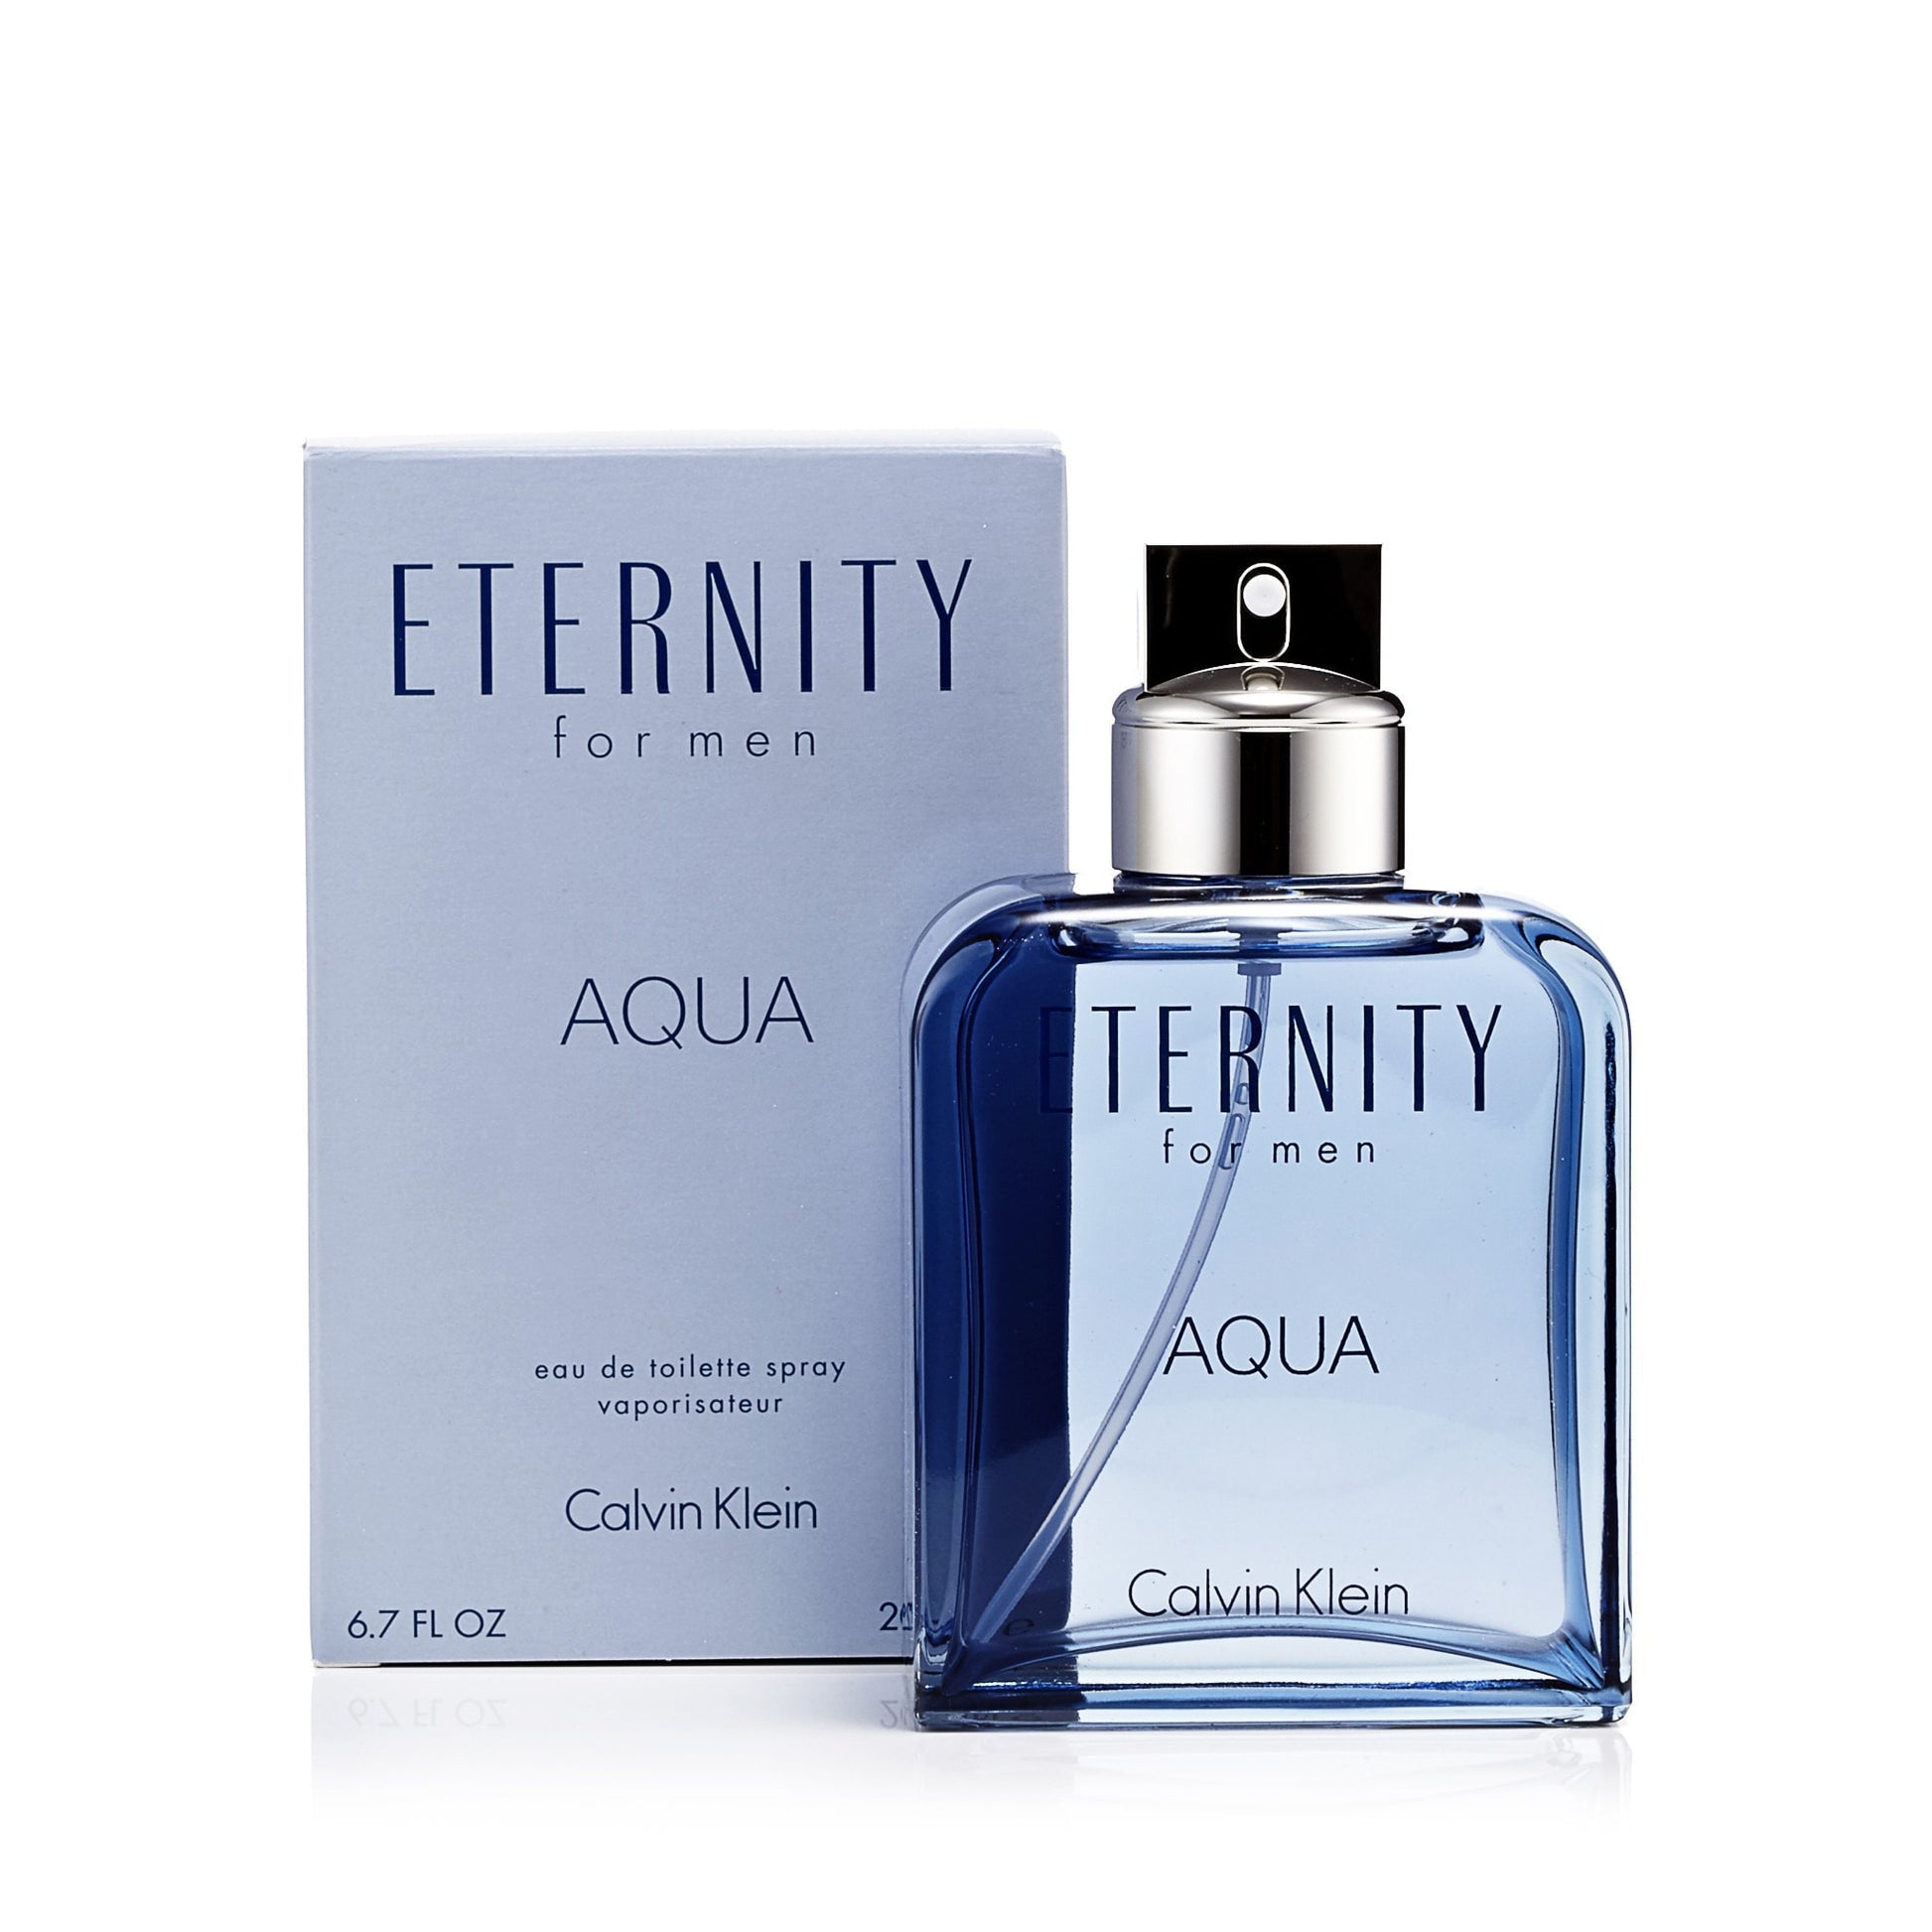 Eternity Aqua Eau de Toilette Spray for Men by Calvin Klein 6.7 oz. Click to open in modal